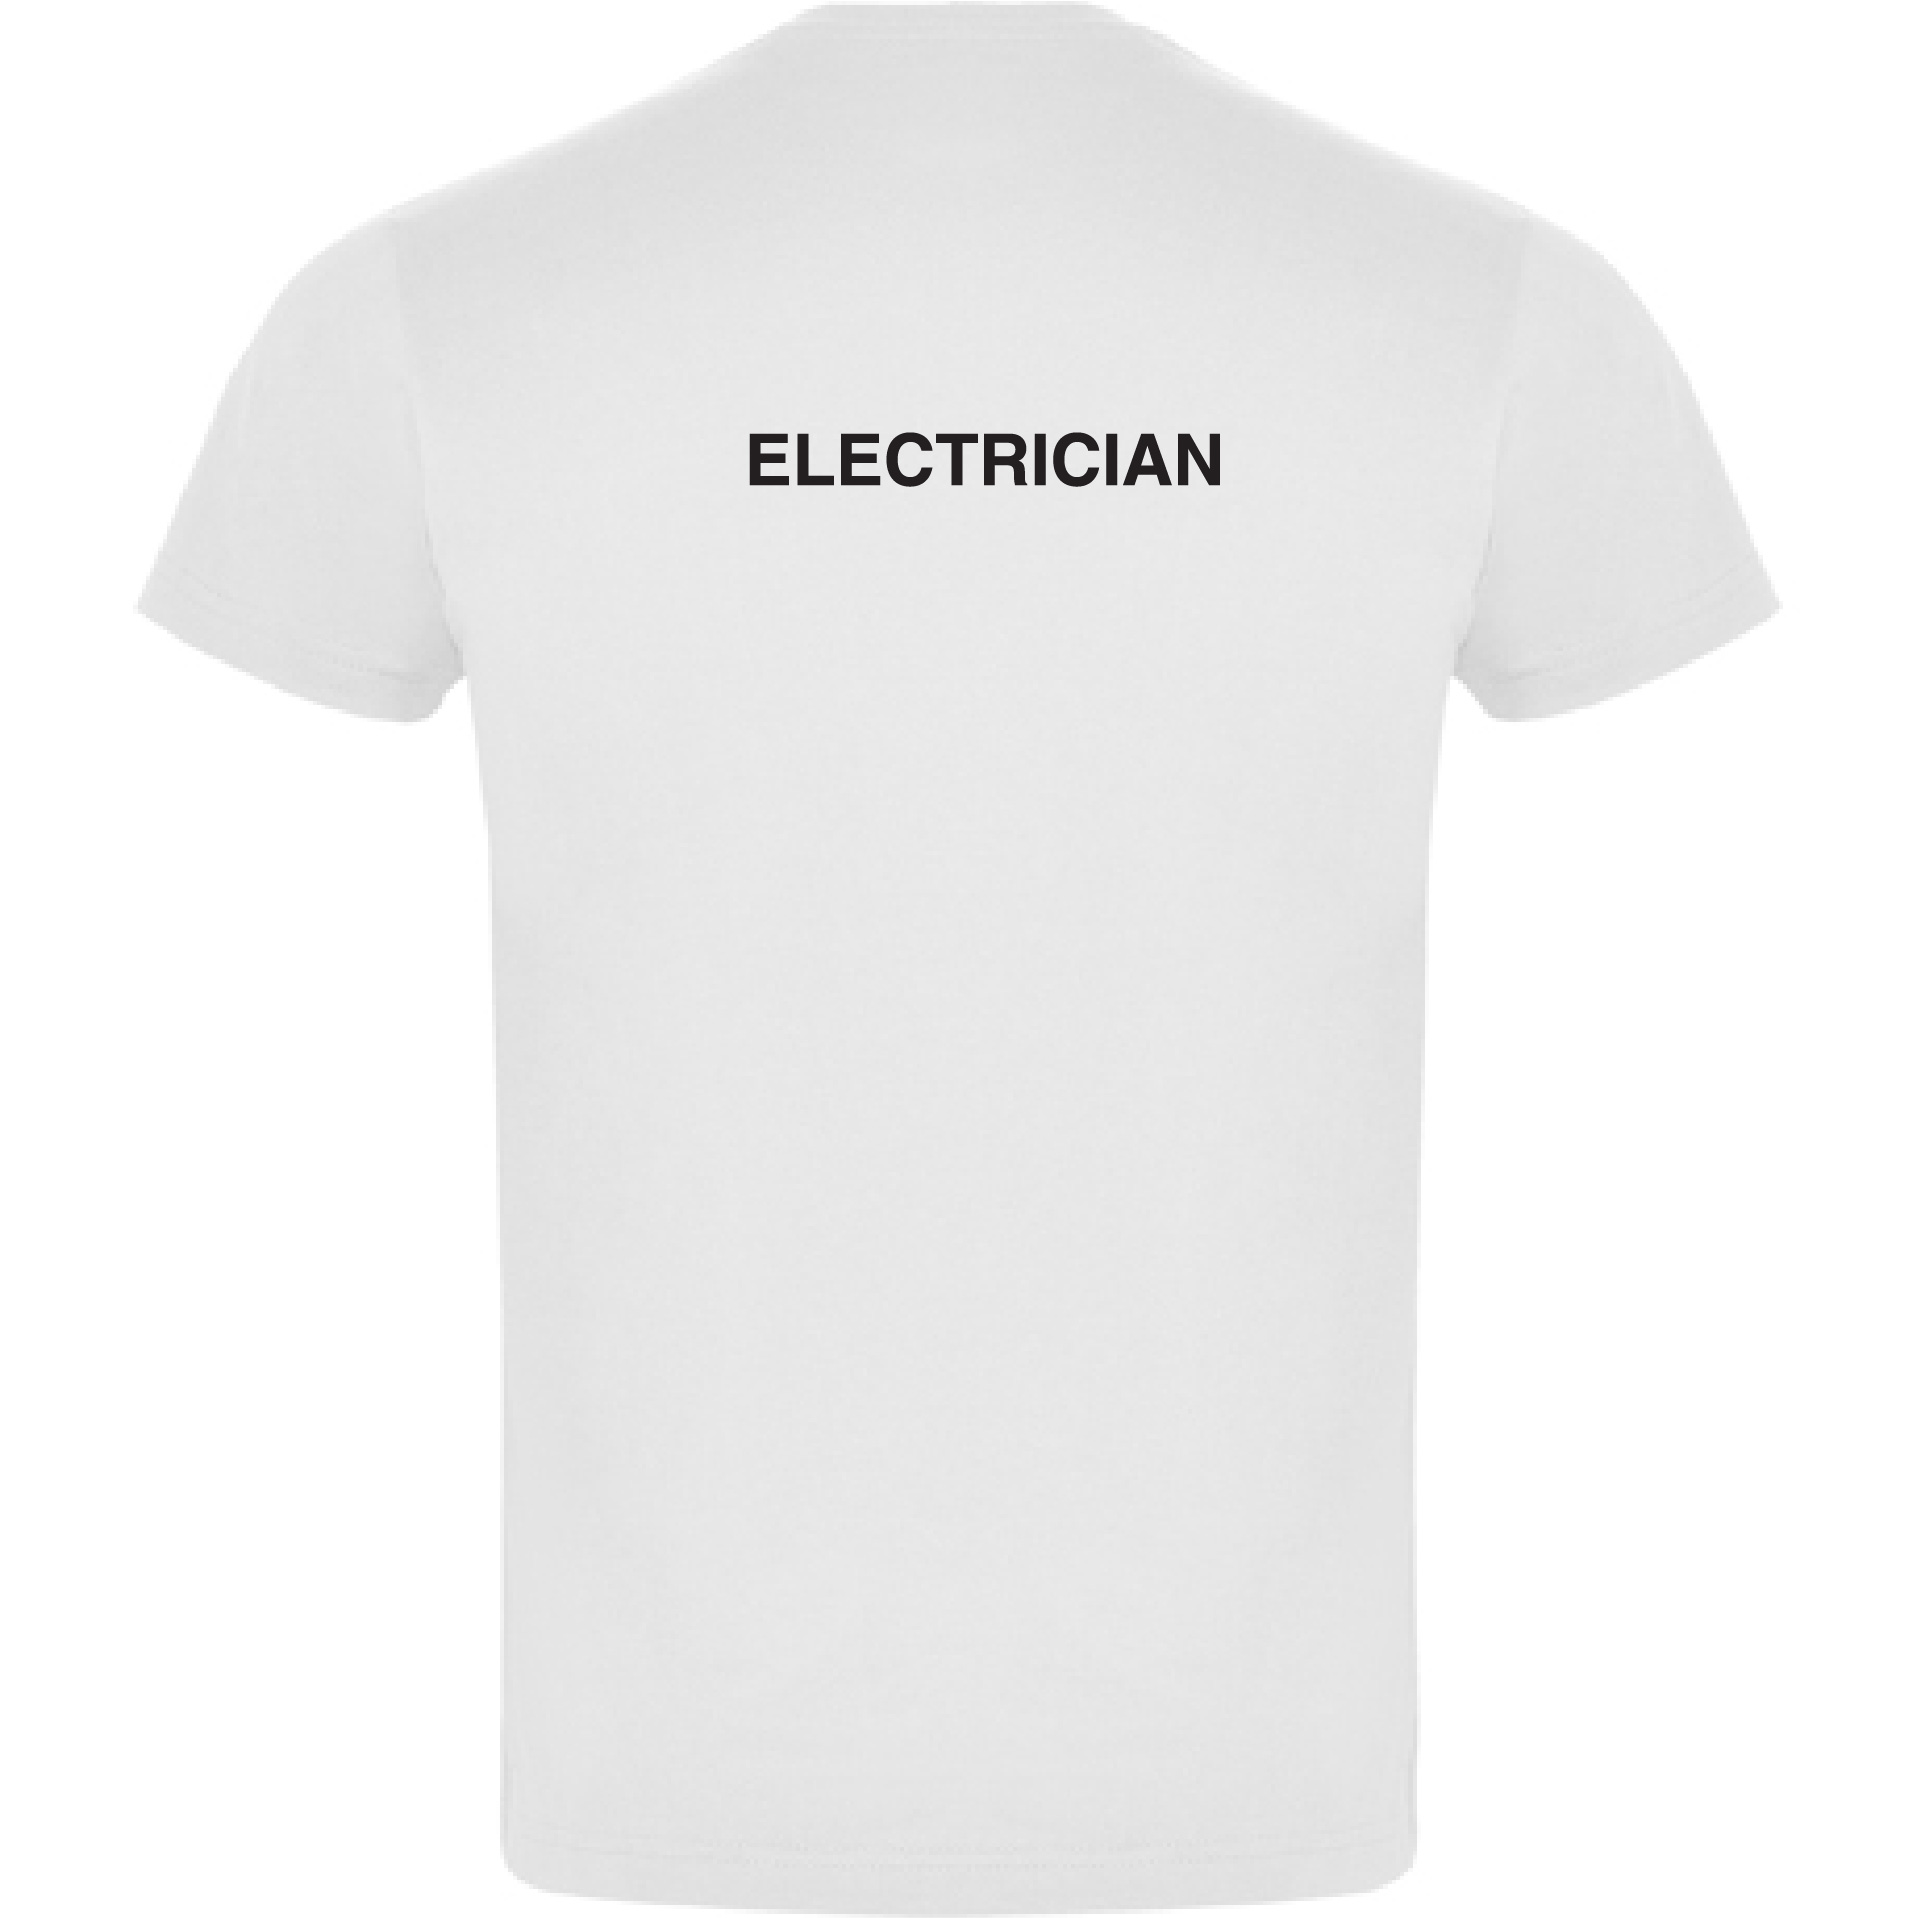 638017879915338355_t-shirt_electrician_back_white.jpg